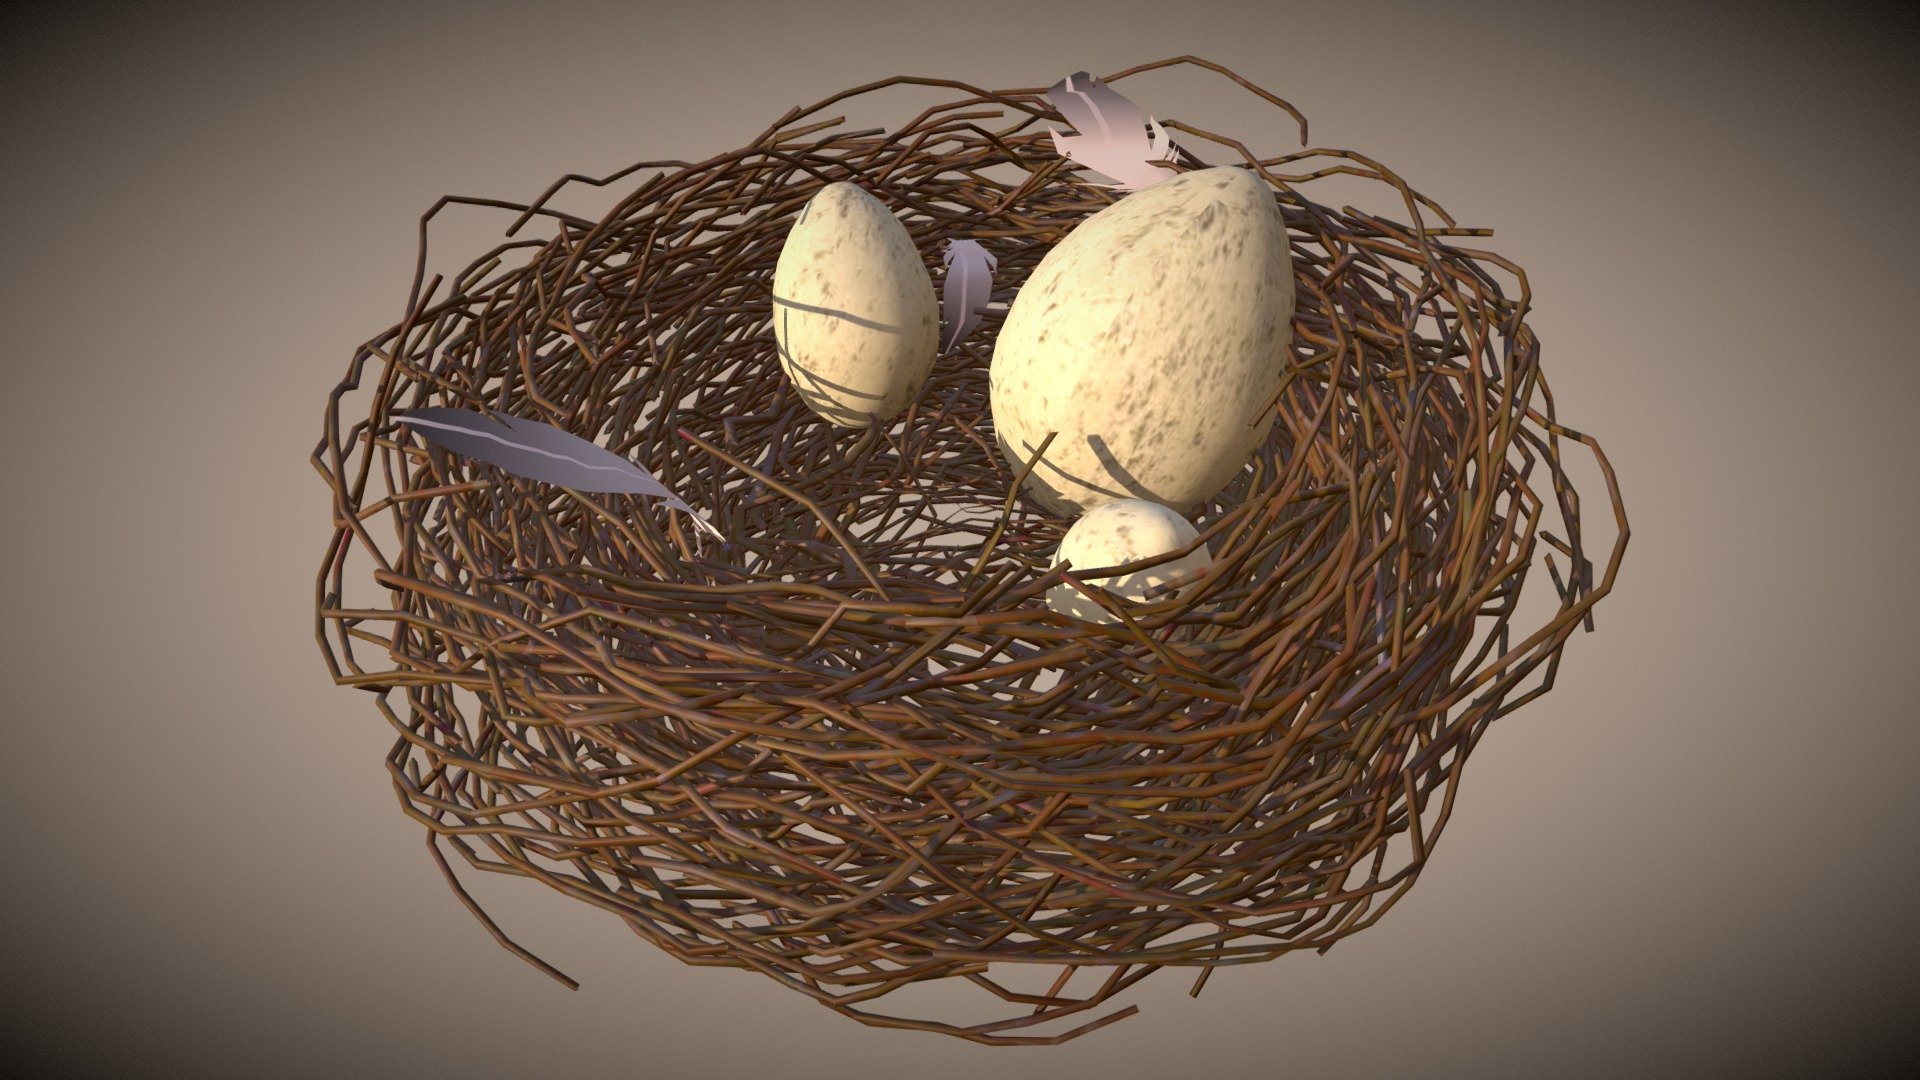 Here's my bird nest model made in Blender using geometry node.

Works in Cycles / Eevee 3d model